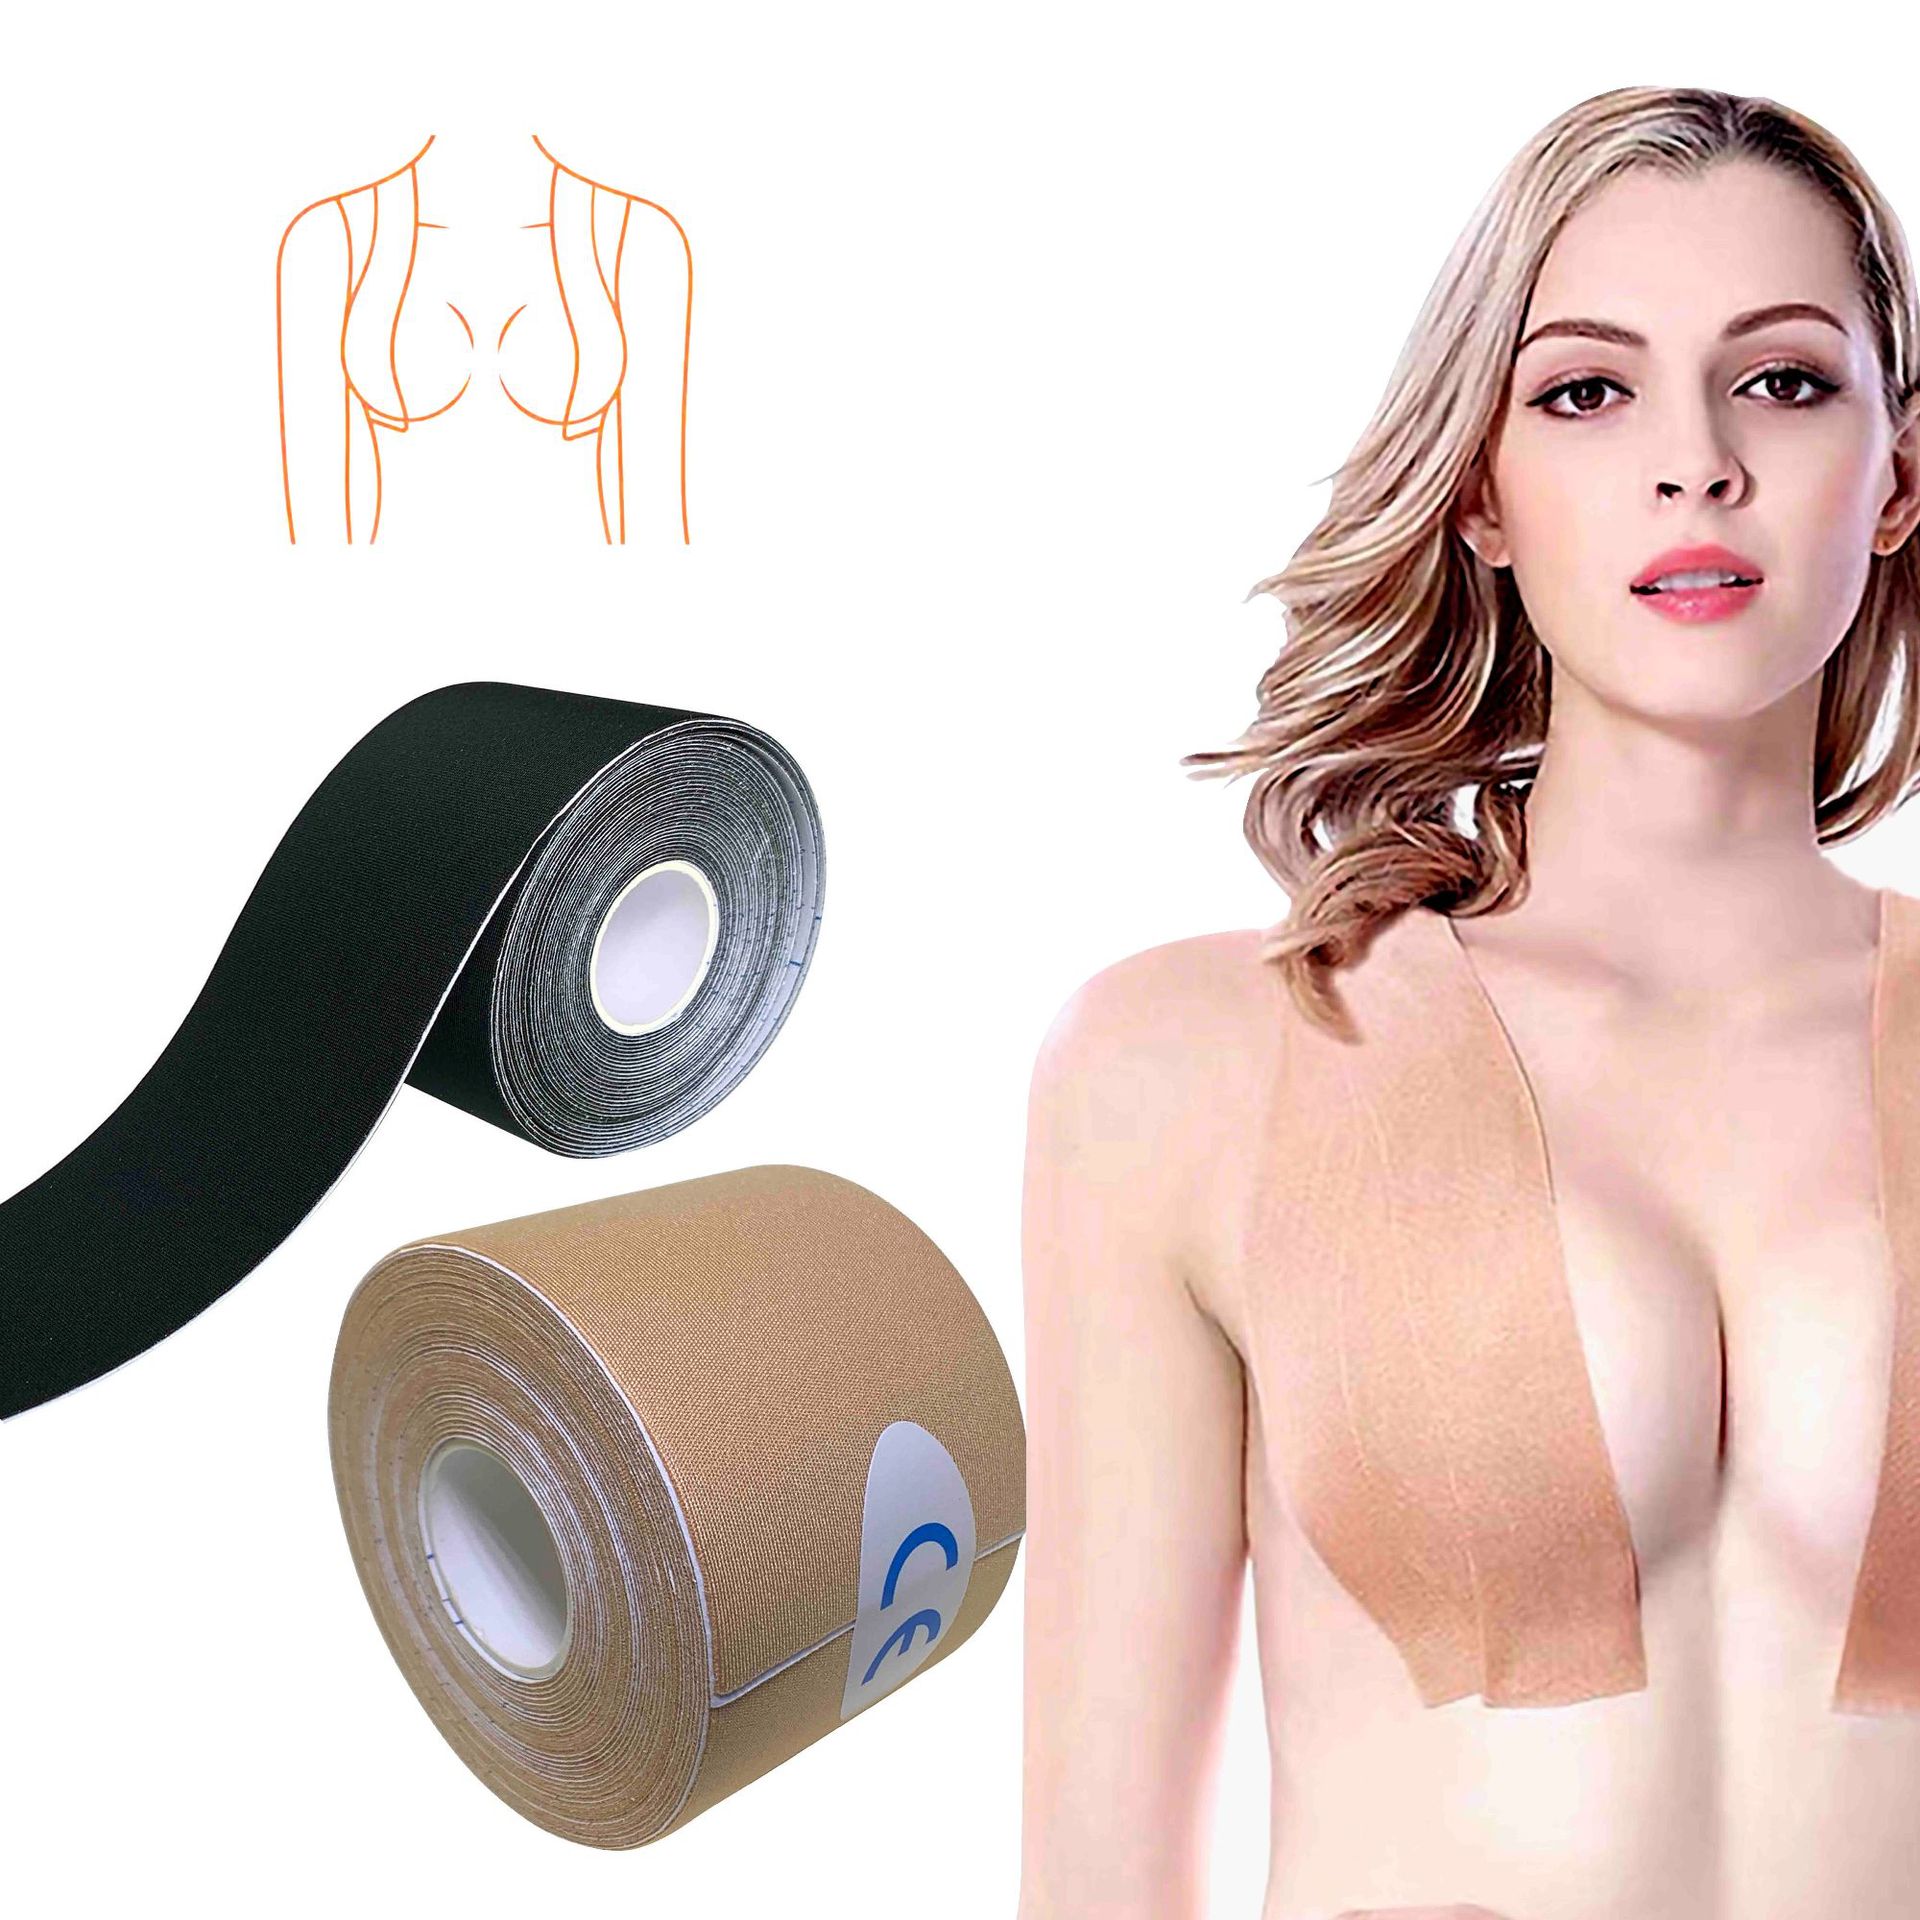 Breast Lifting tape